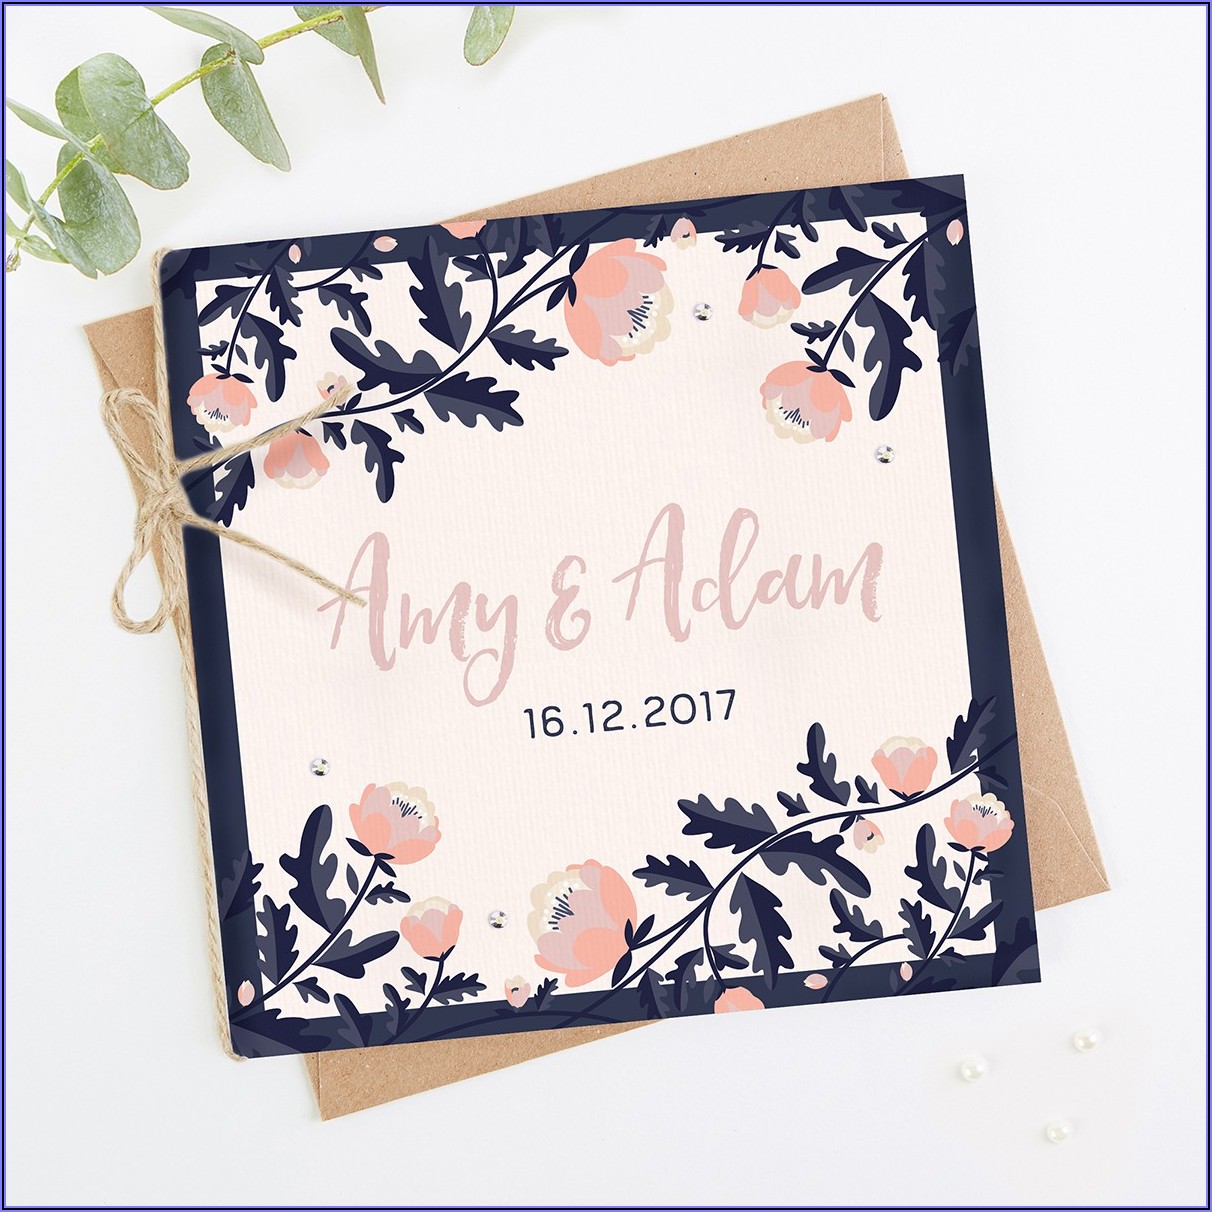 Wedding Invitation Card Background Pinterest